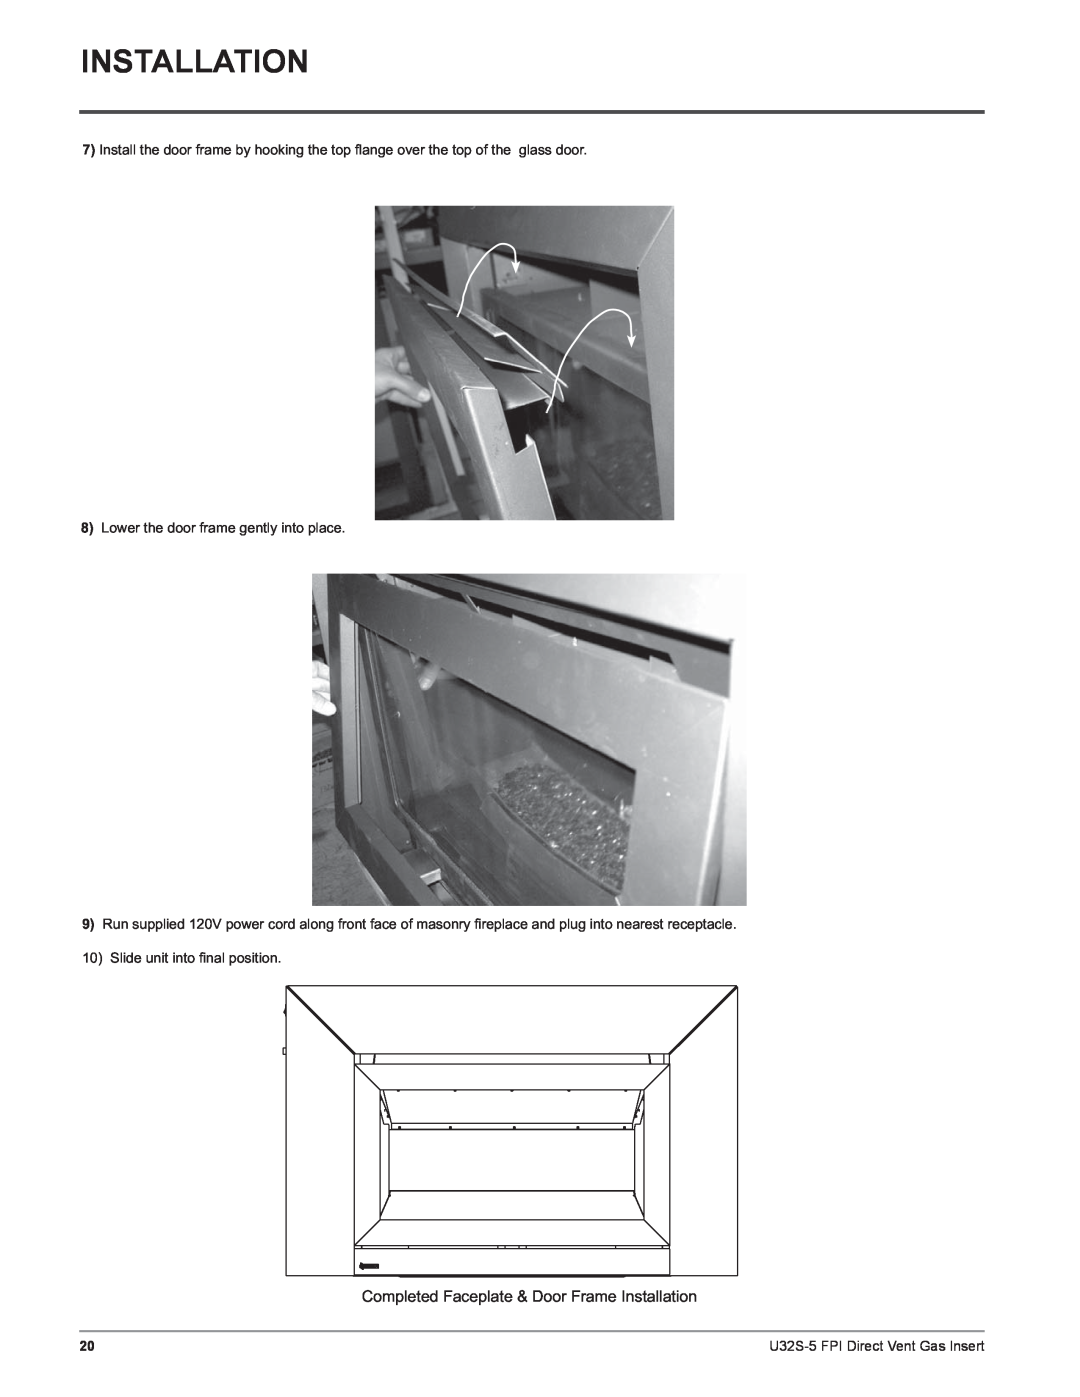 Regency U32S-NG5, U32S-LP5 Completed Faceplate & Door Frame Installation, 8Lower the door frame gently into place 